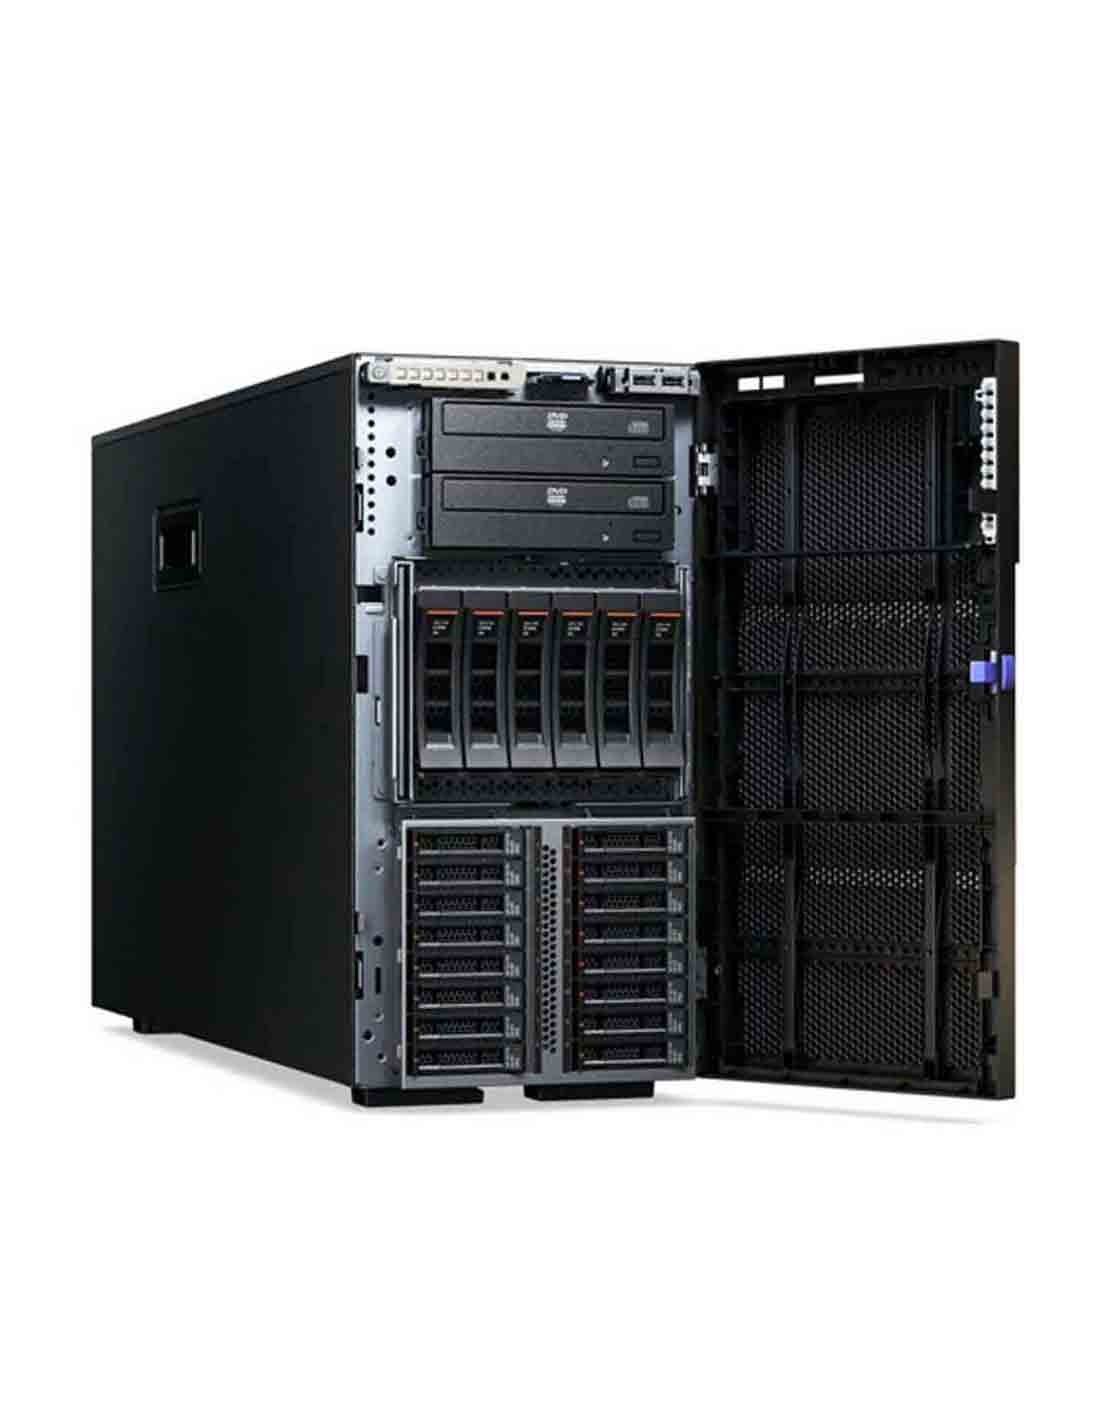 Lenovo System x3500 M5 Tower Server Intel Xeon E5-2640v3 16 GB memory at a Cheap Price in Dubai Online Store